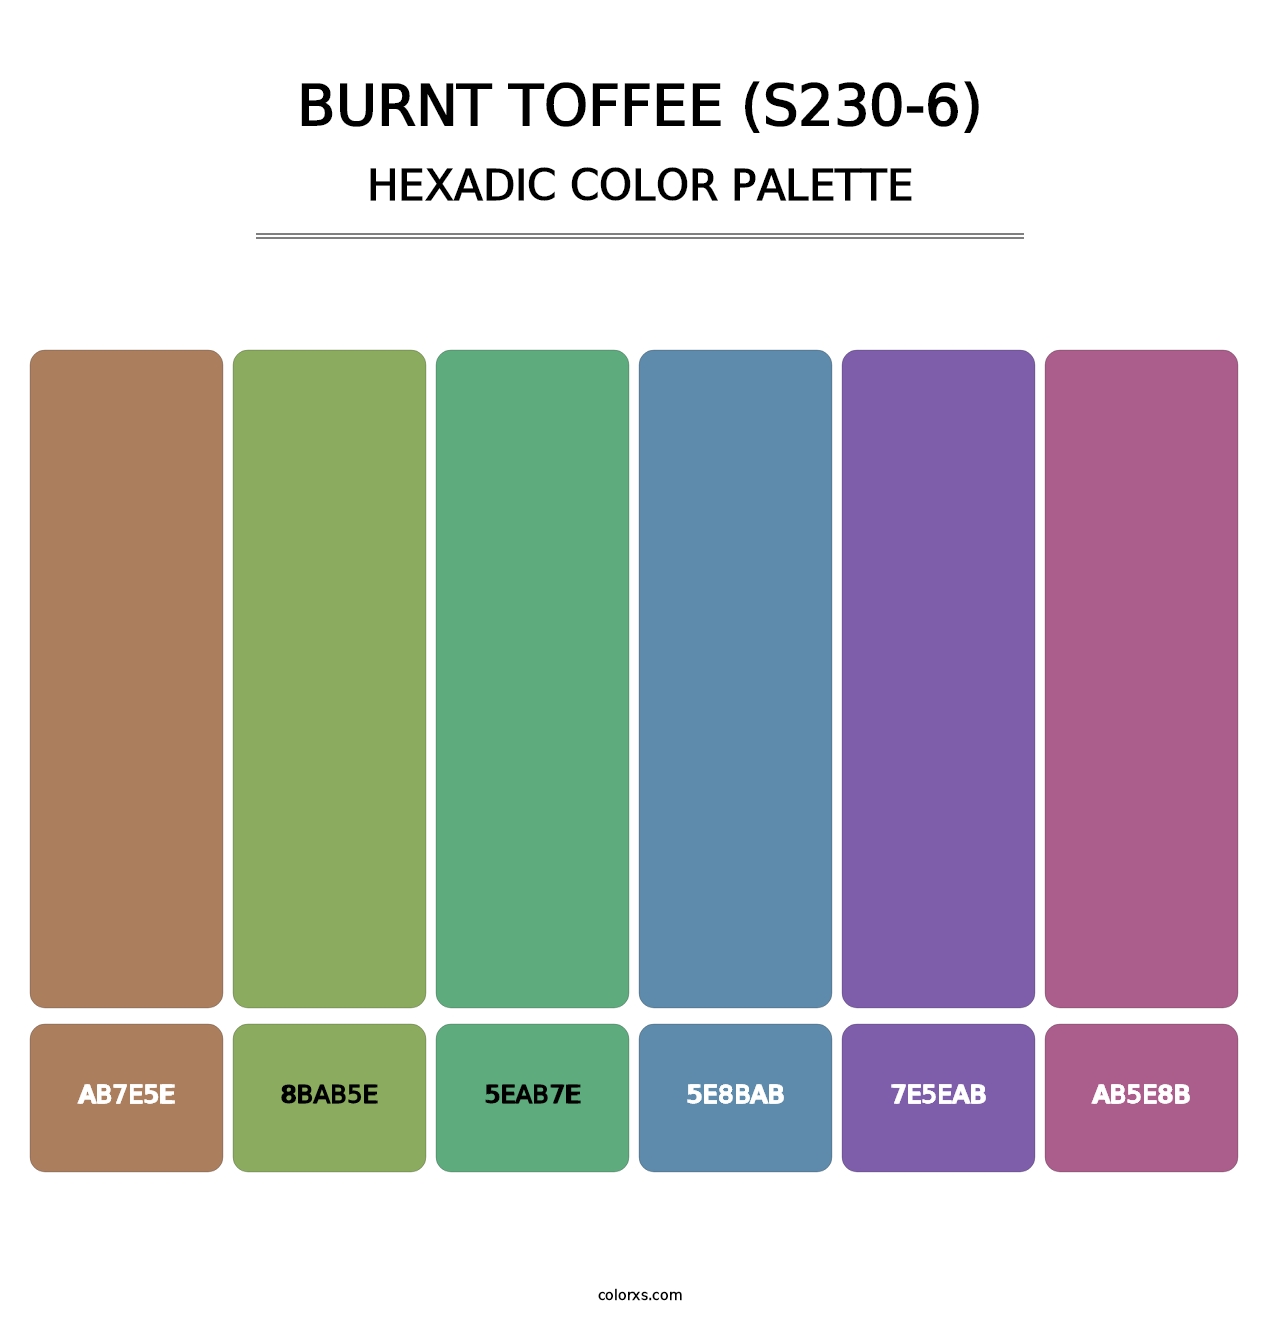 Burnt Toffee (S230-6) - Hexadic Color Palette